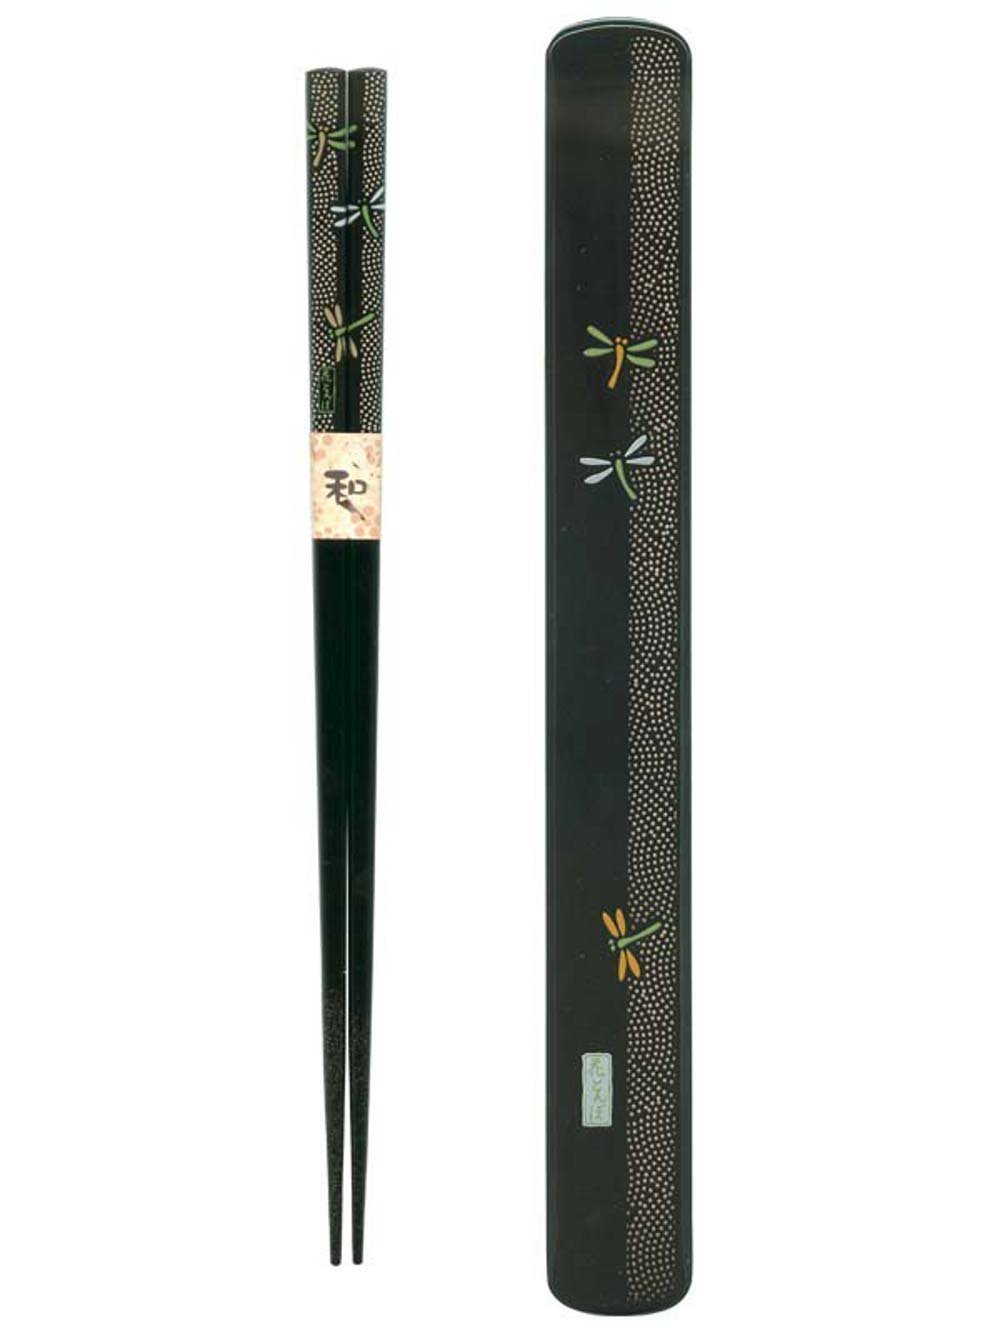 M.V. Trrading MTAN090719V Japanese Chopsticks Set with Travel Carry Case,Black with Dragonfly